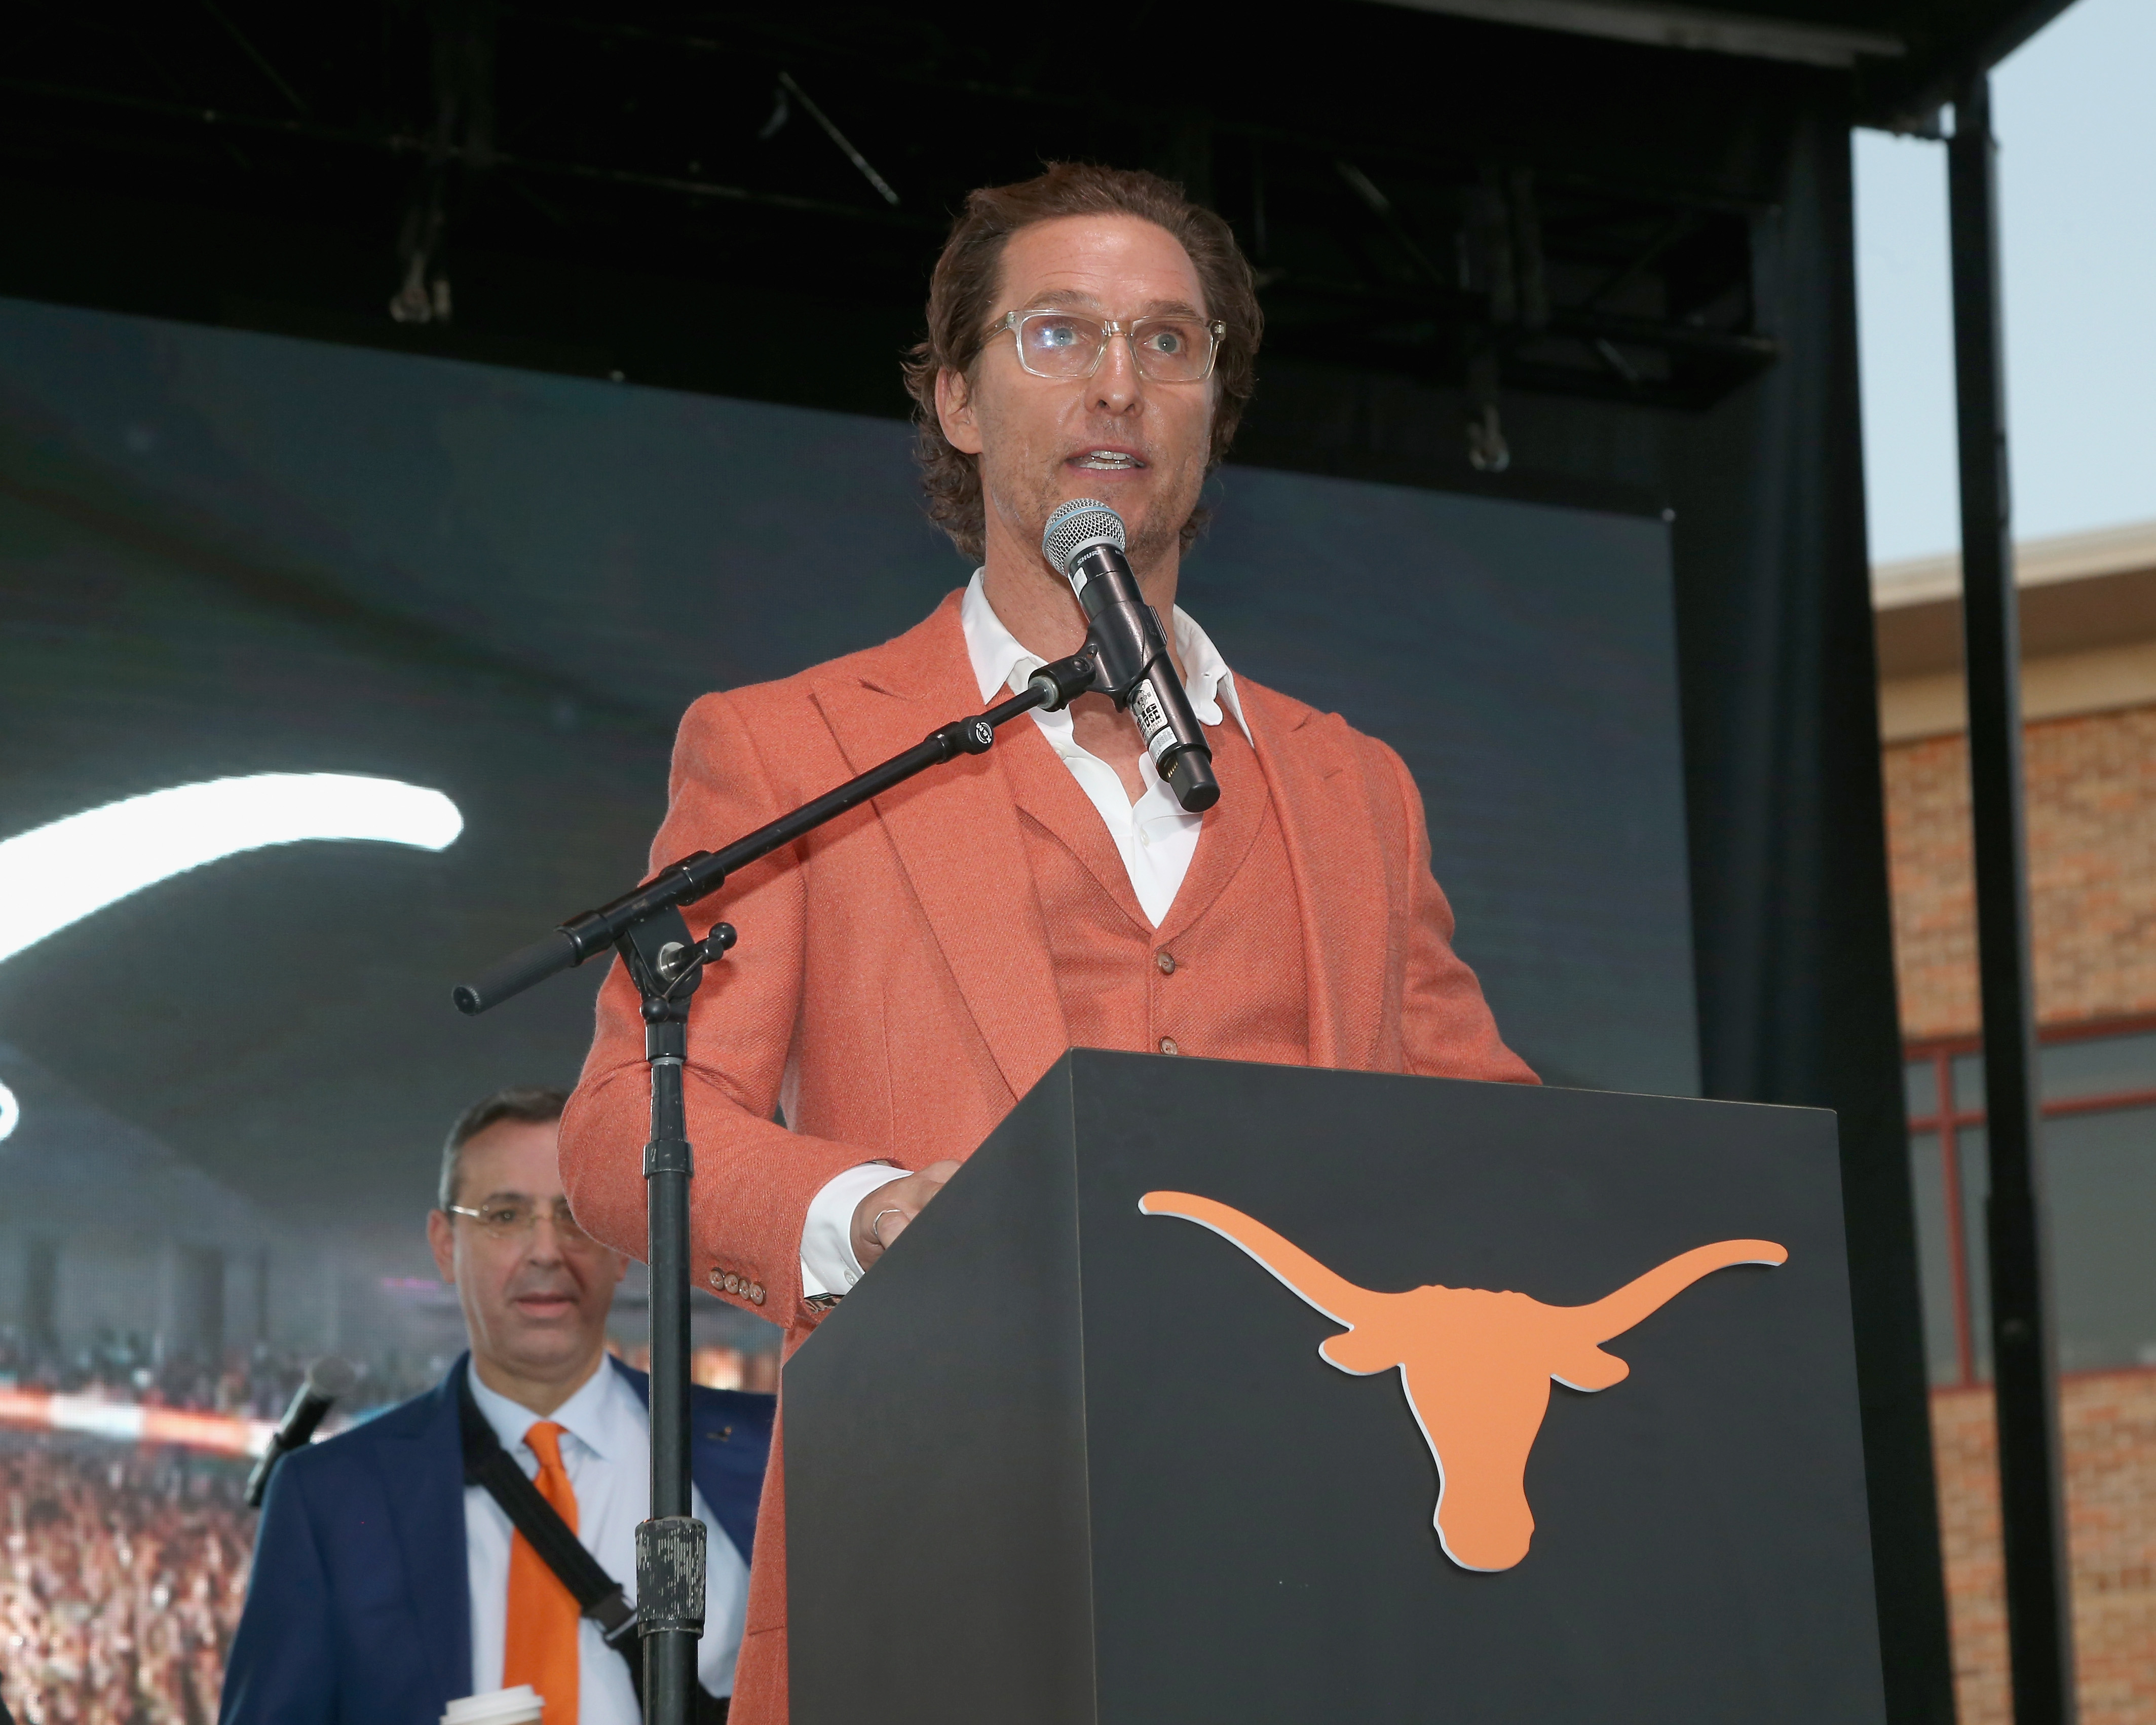 Matthew McConaughey speaks at a podium